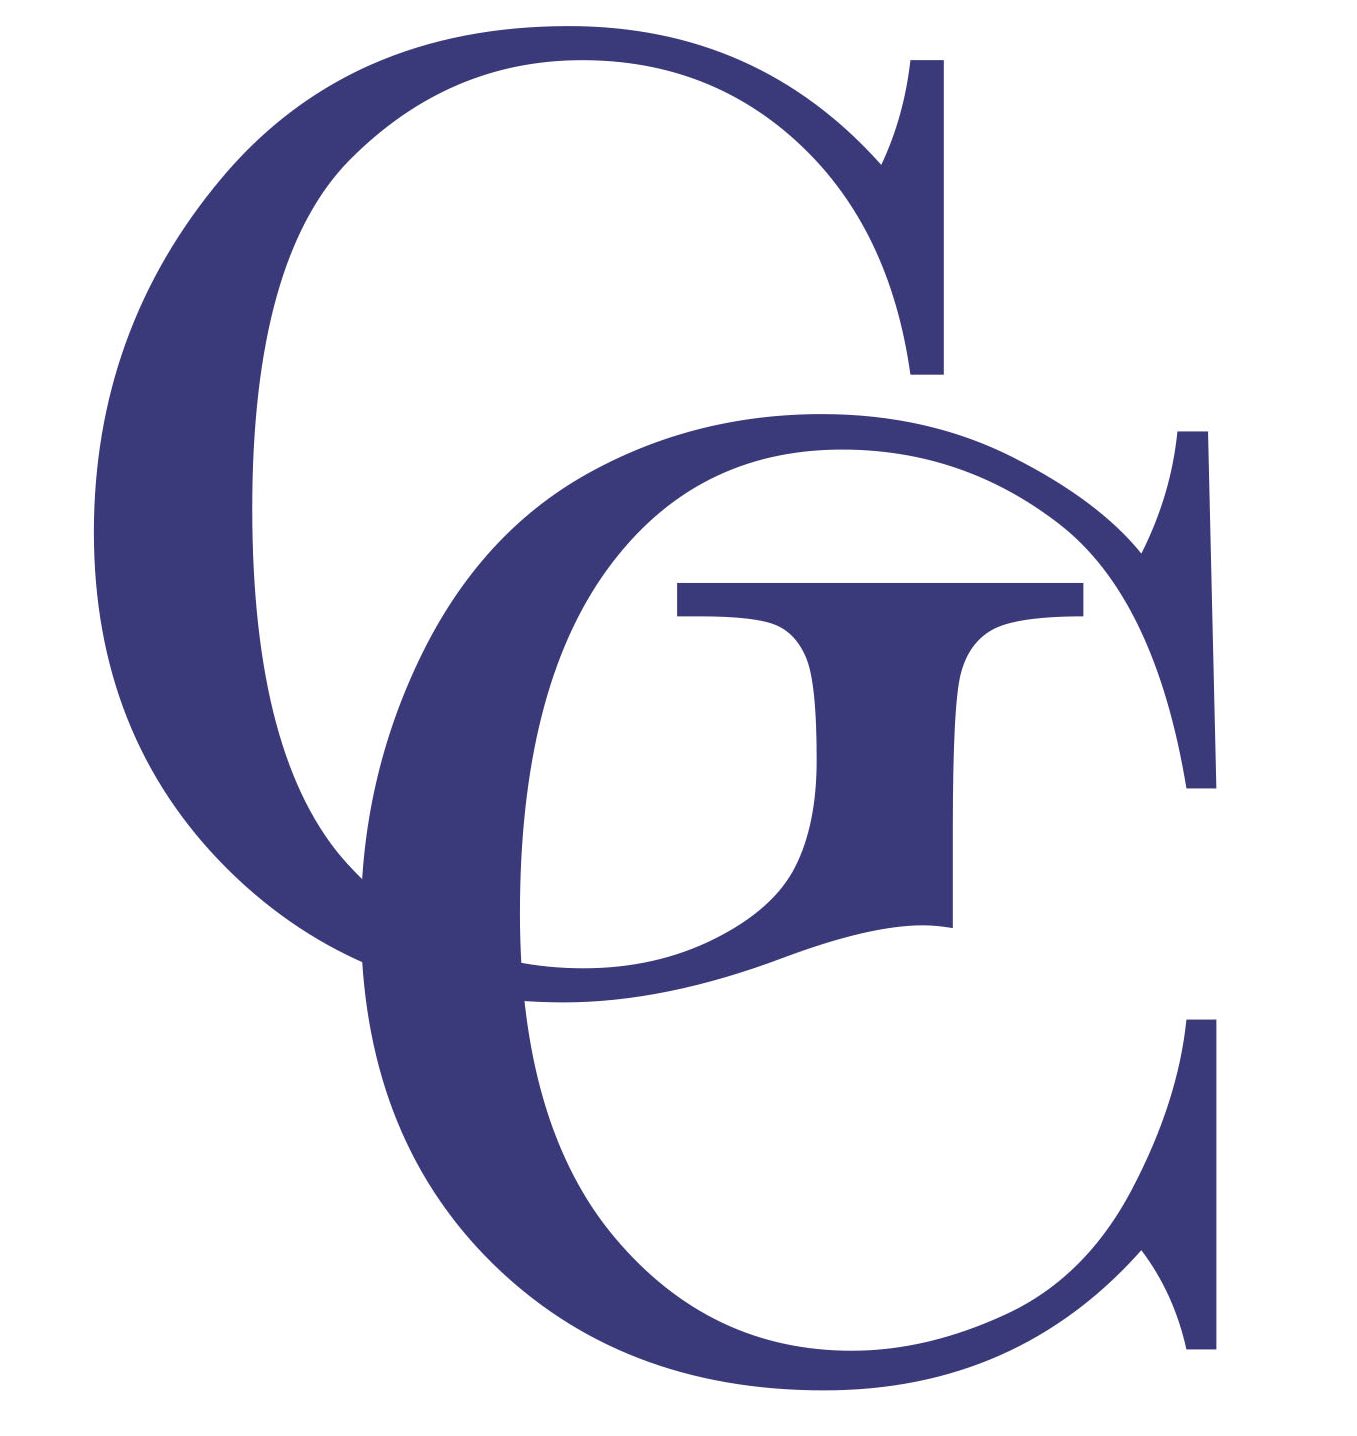 Gardner Construction Co., Inc. – General Commercial Contractor